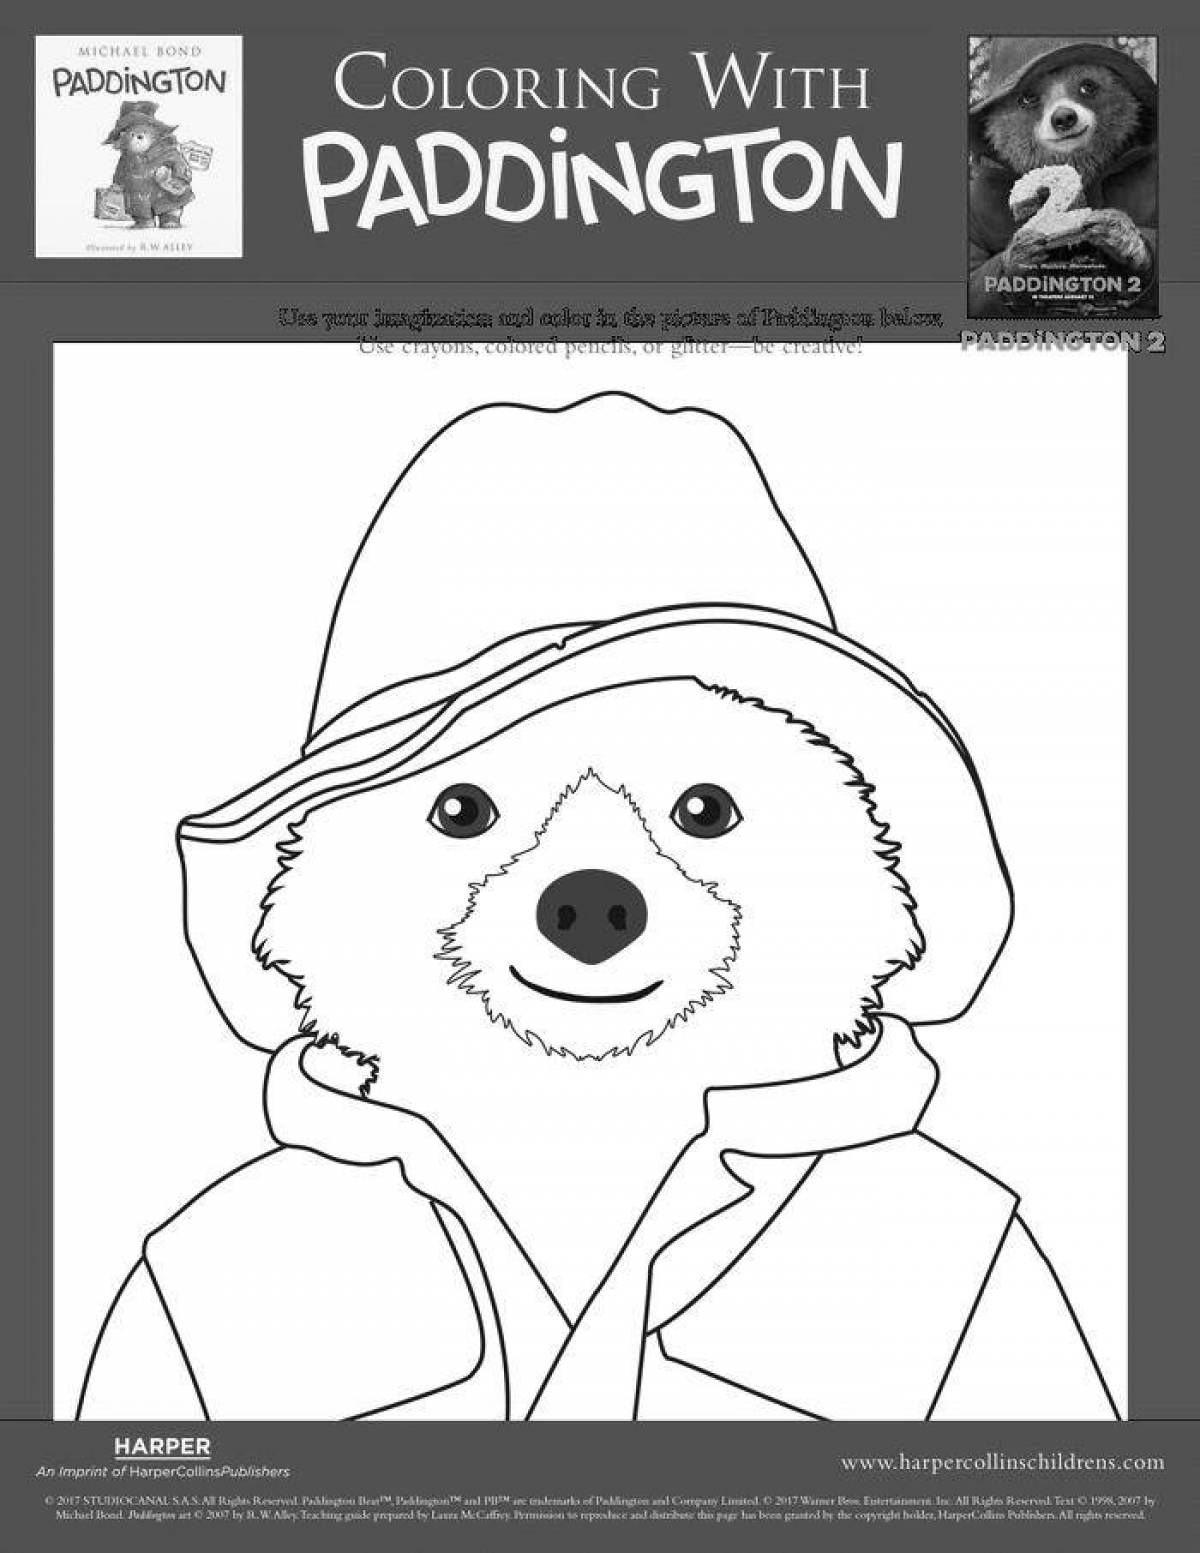 Paddington bear #2